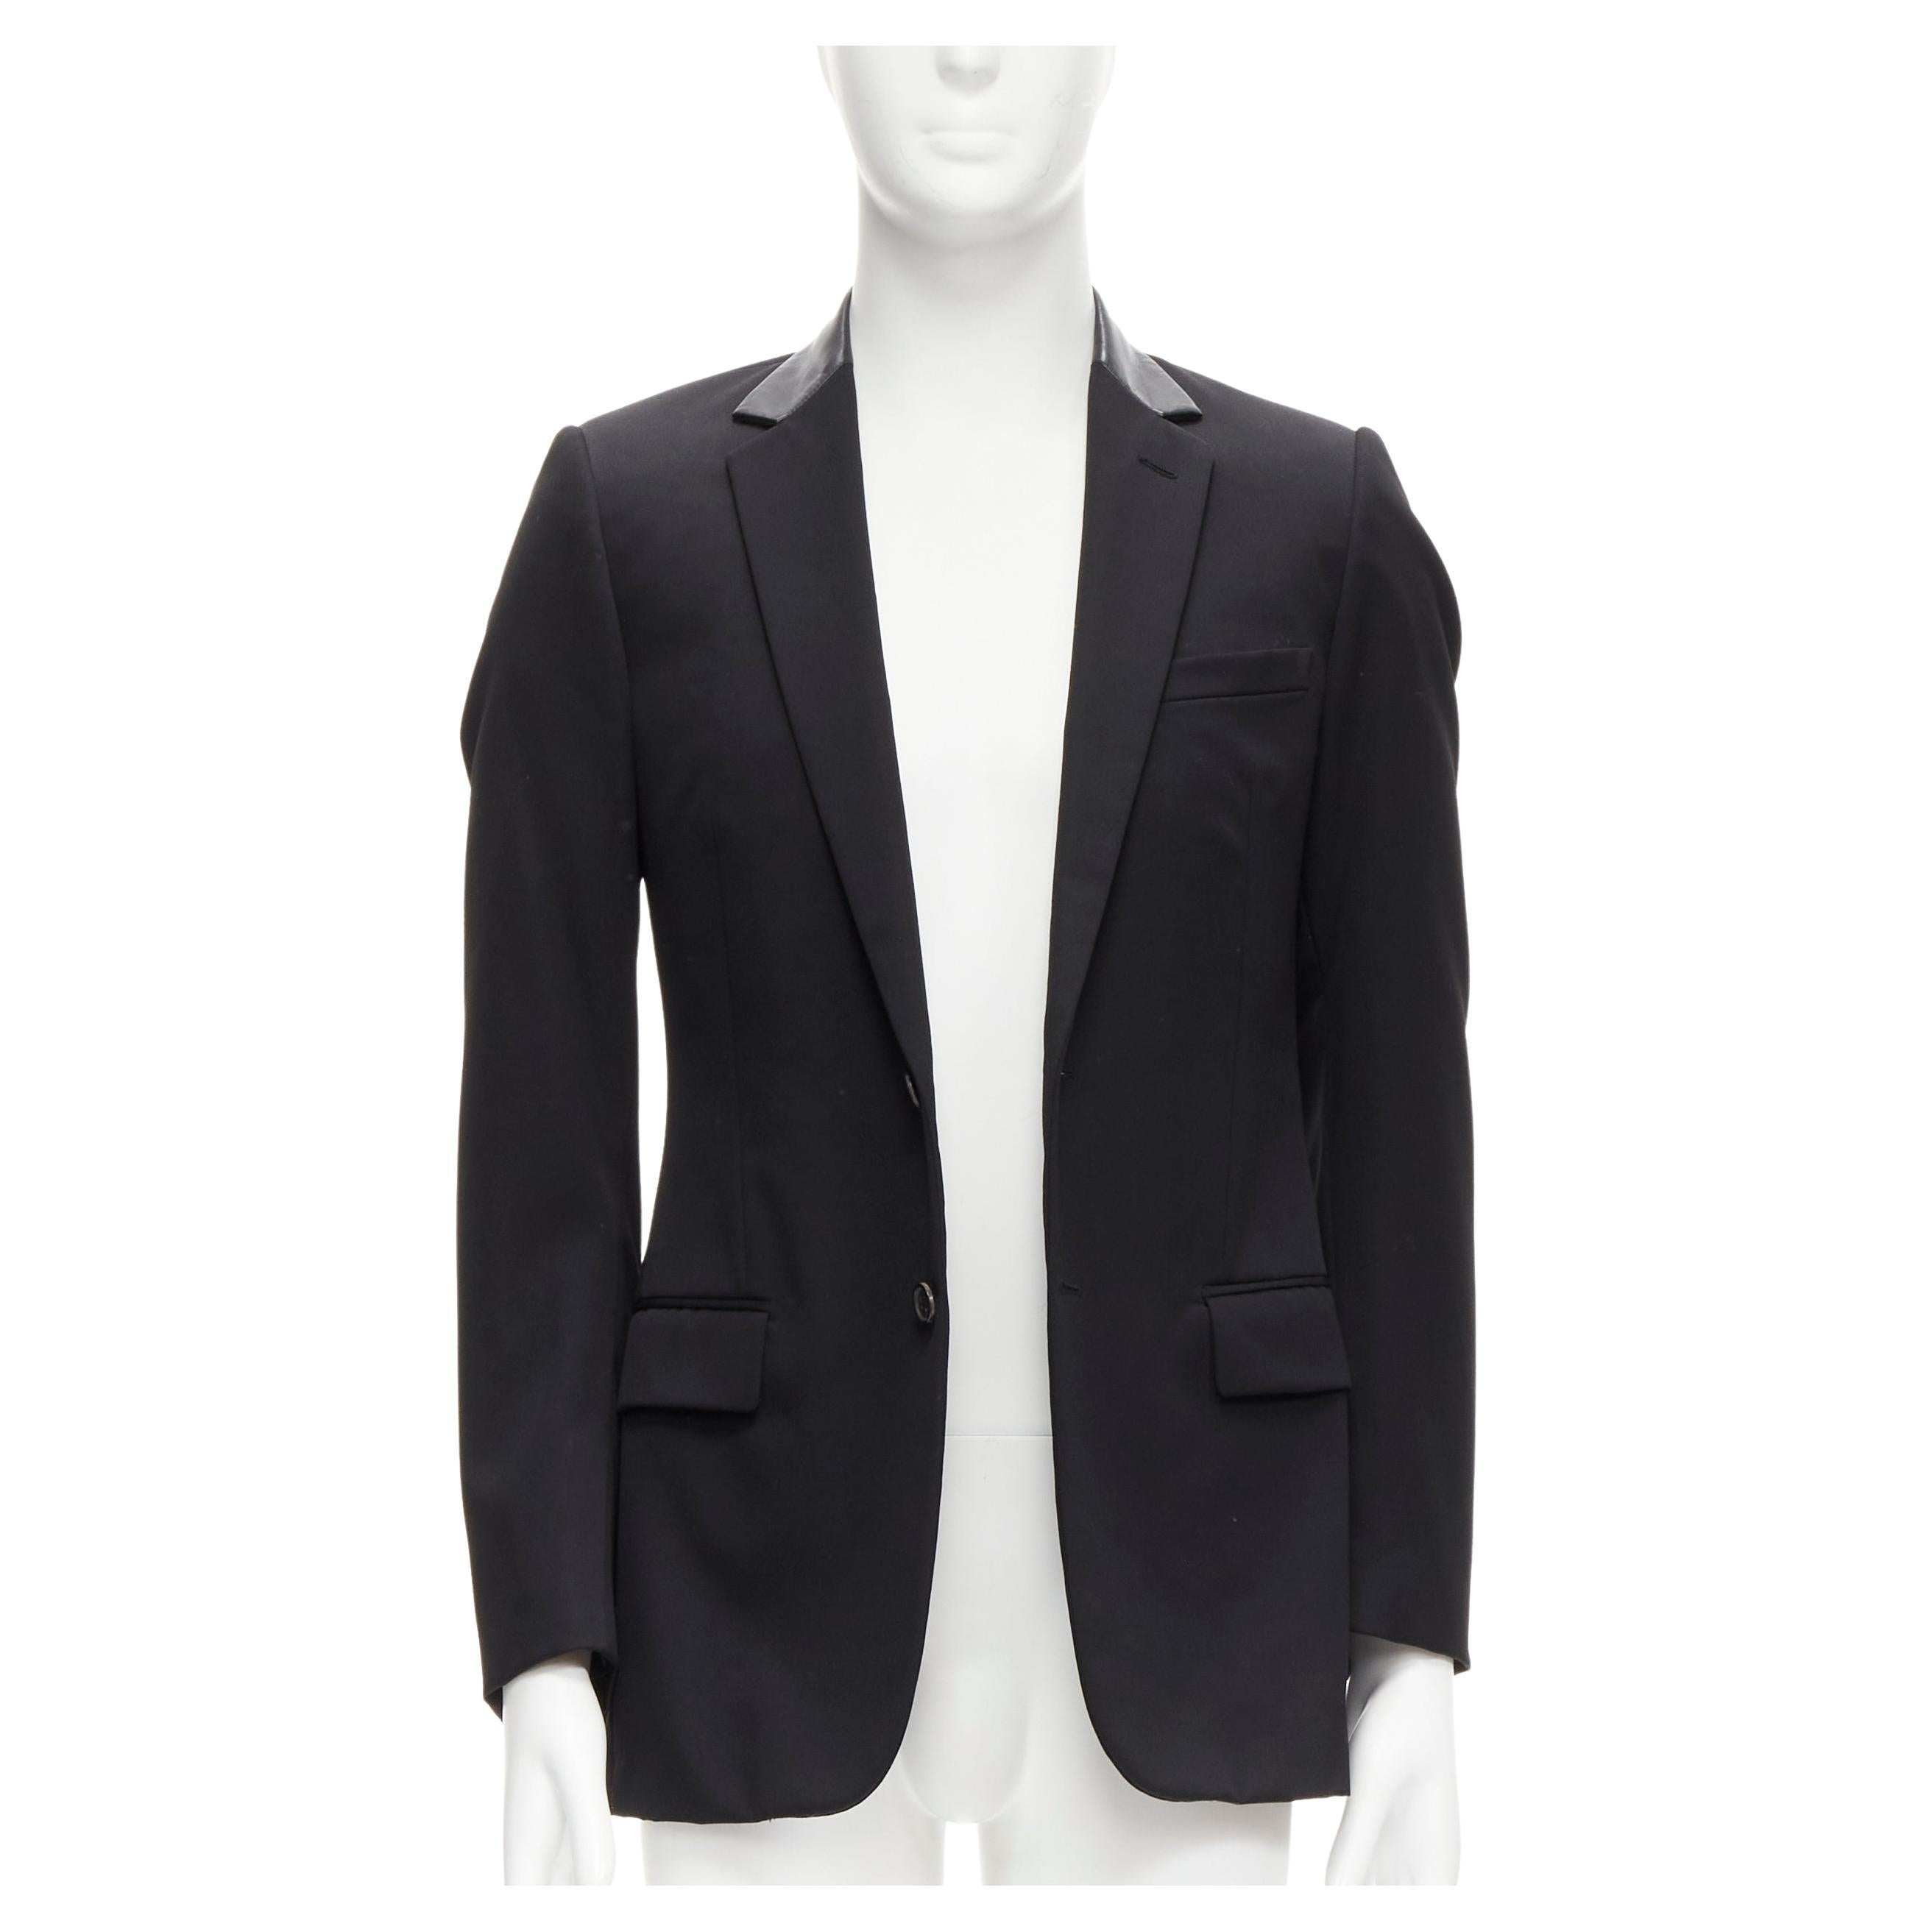 DIOR HOMME Hedi Slimane leather collar classic 2-button blazer jacket FR46 S For Sale